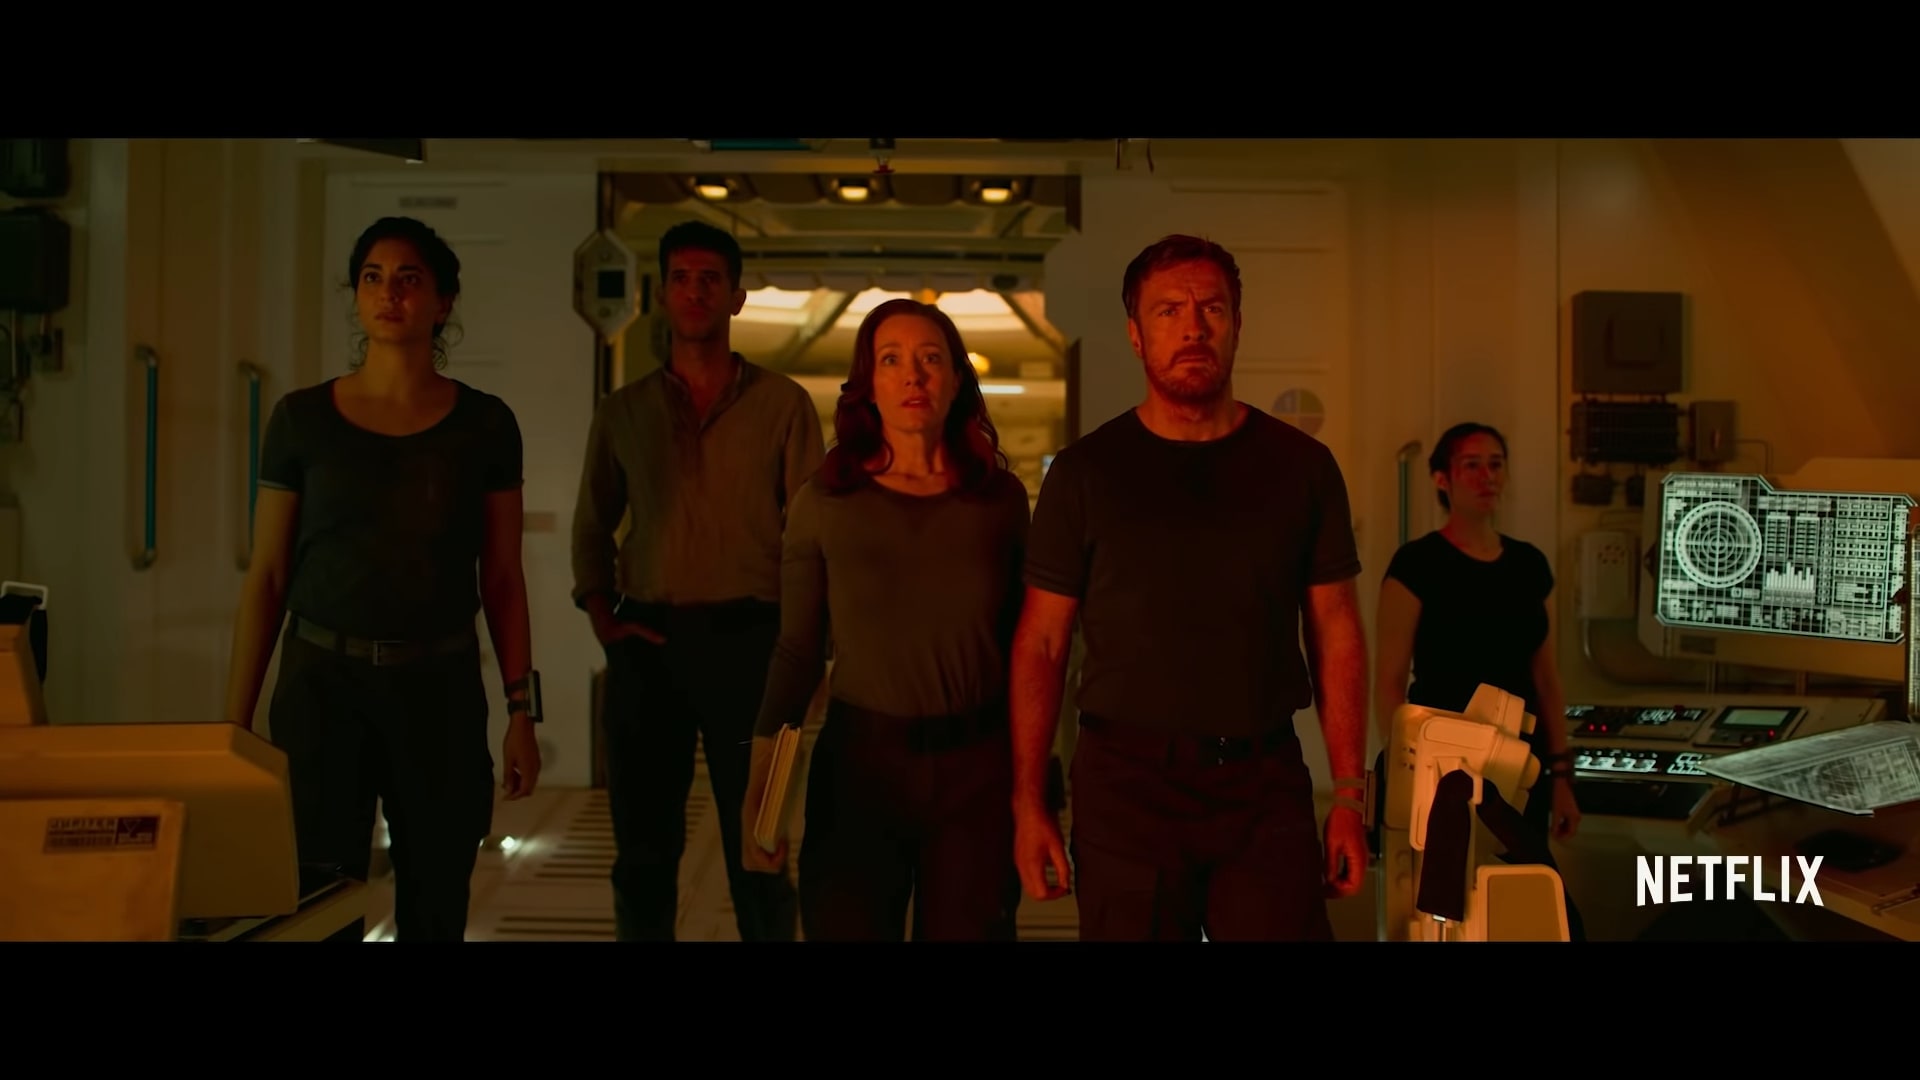 Netflix Lost in Space Final Season Trailer, Coming to Netflix in December 2021